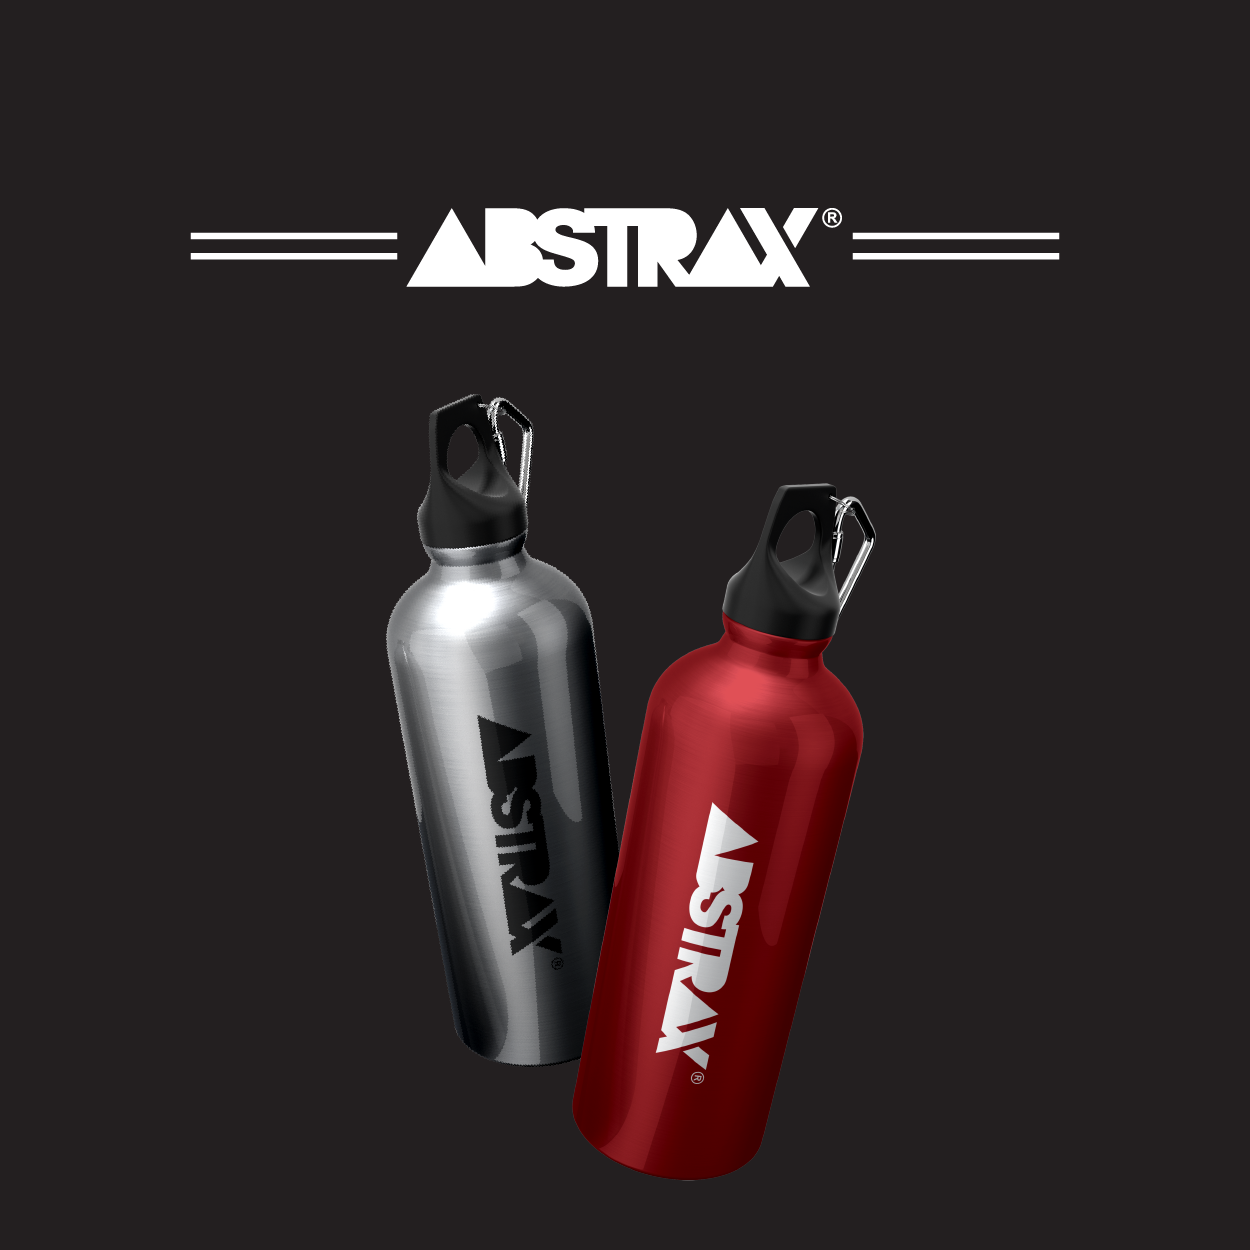 ABSTRAX® Bottle